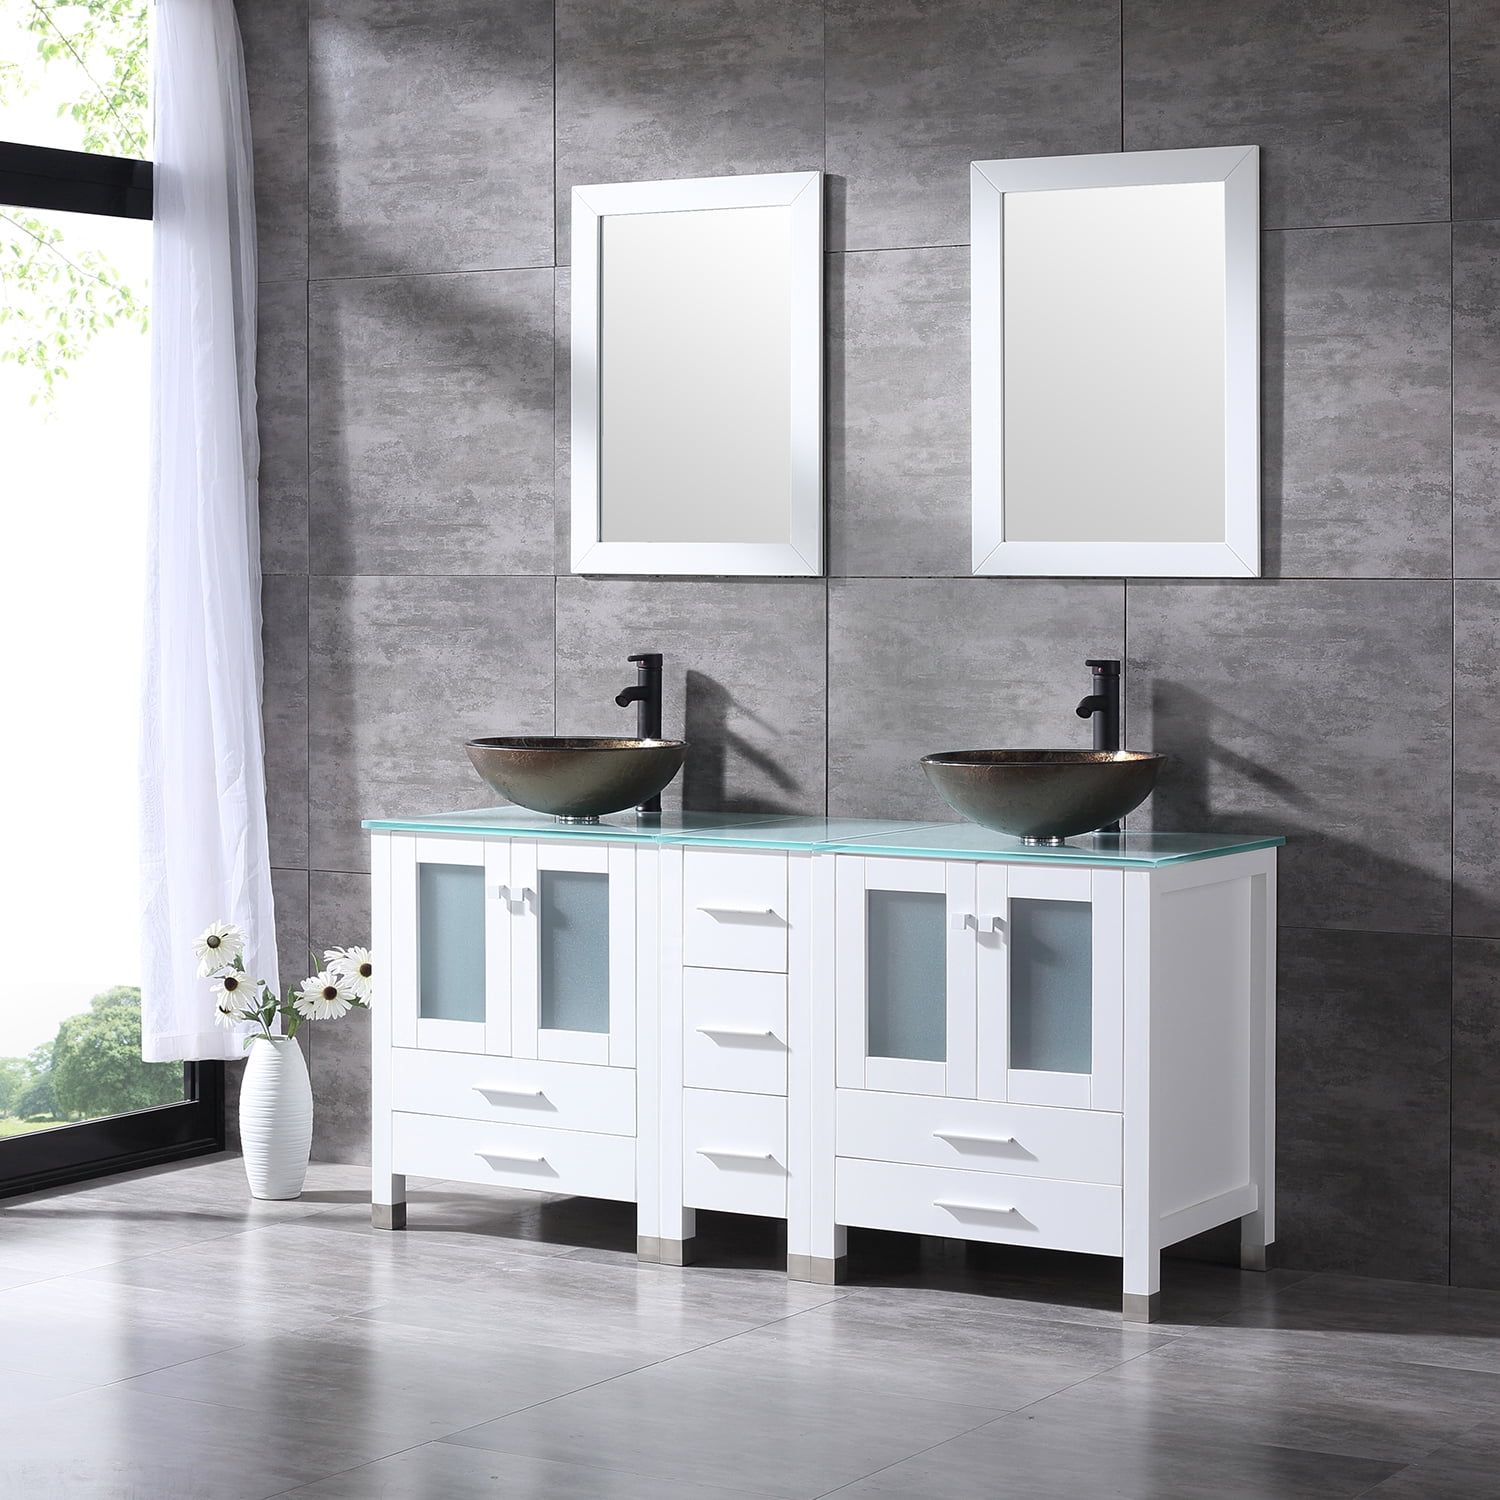 Details about   24" Bathroom Vanity Brown Square Vessel Glass Sink Set ORB Faucet Cabinet Combo 